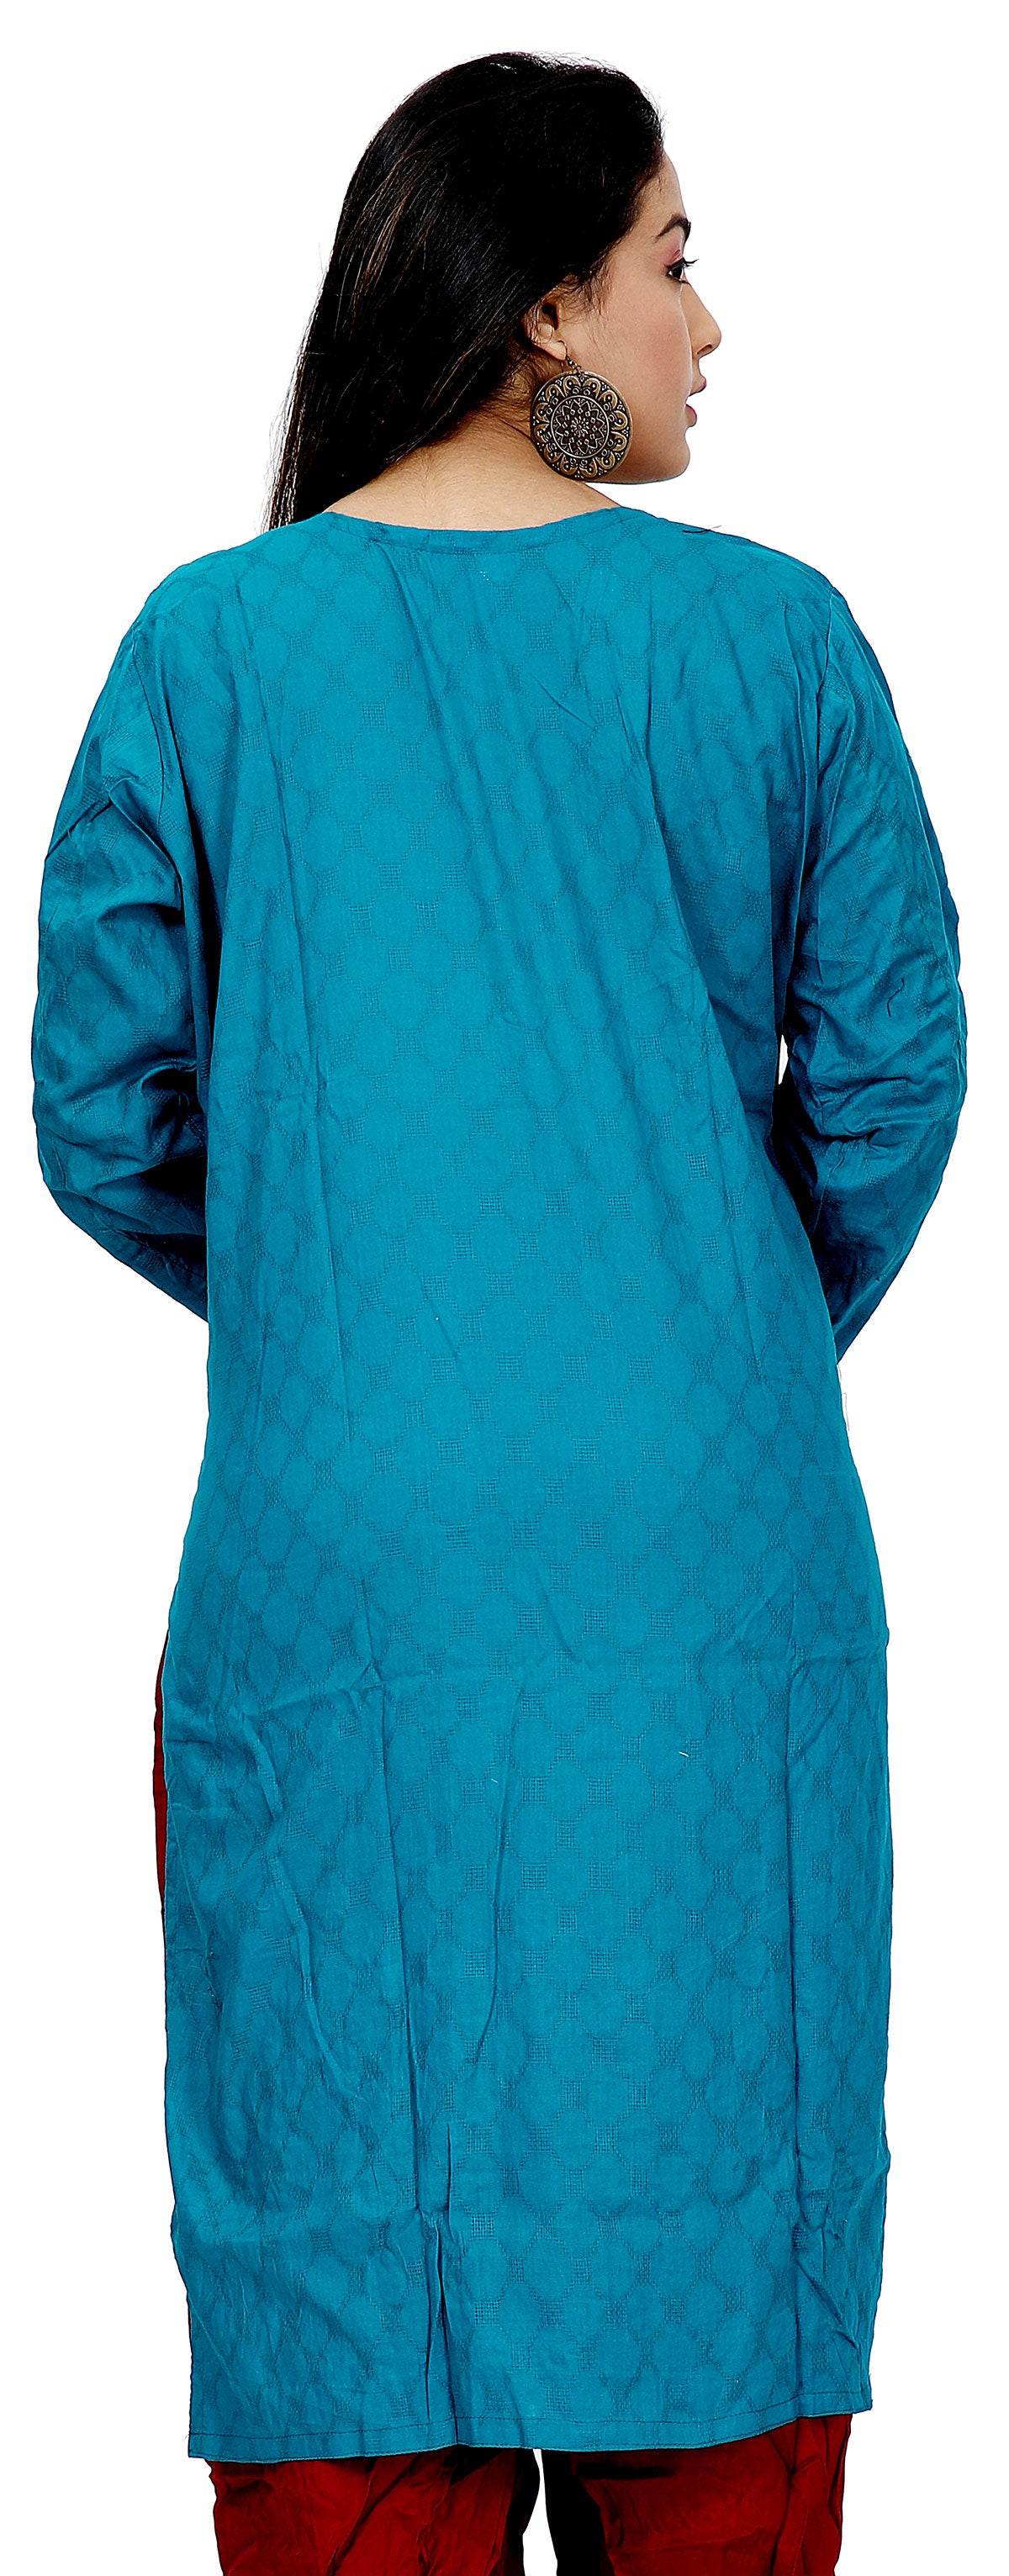 Blue  Embroidered  Salwar kameez Dress Chest size 52